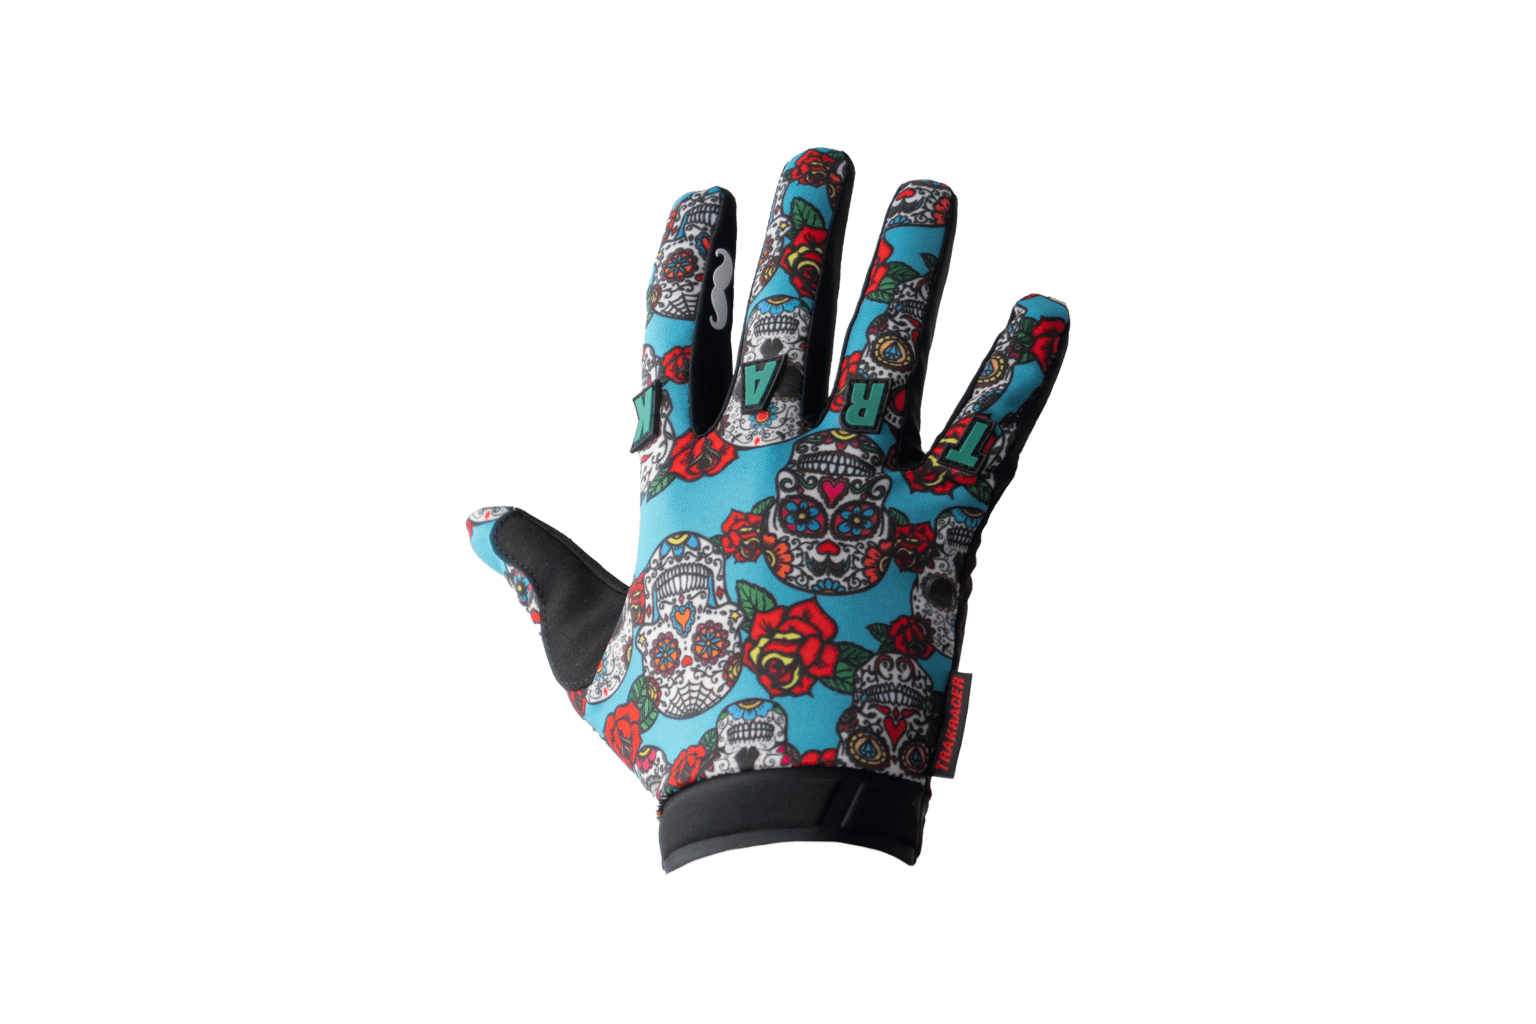 Best SimRacing Gloves 2019 - BoxThisLap